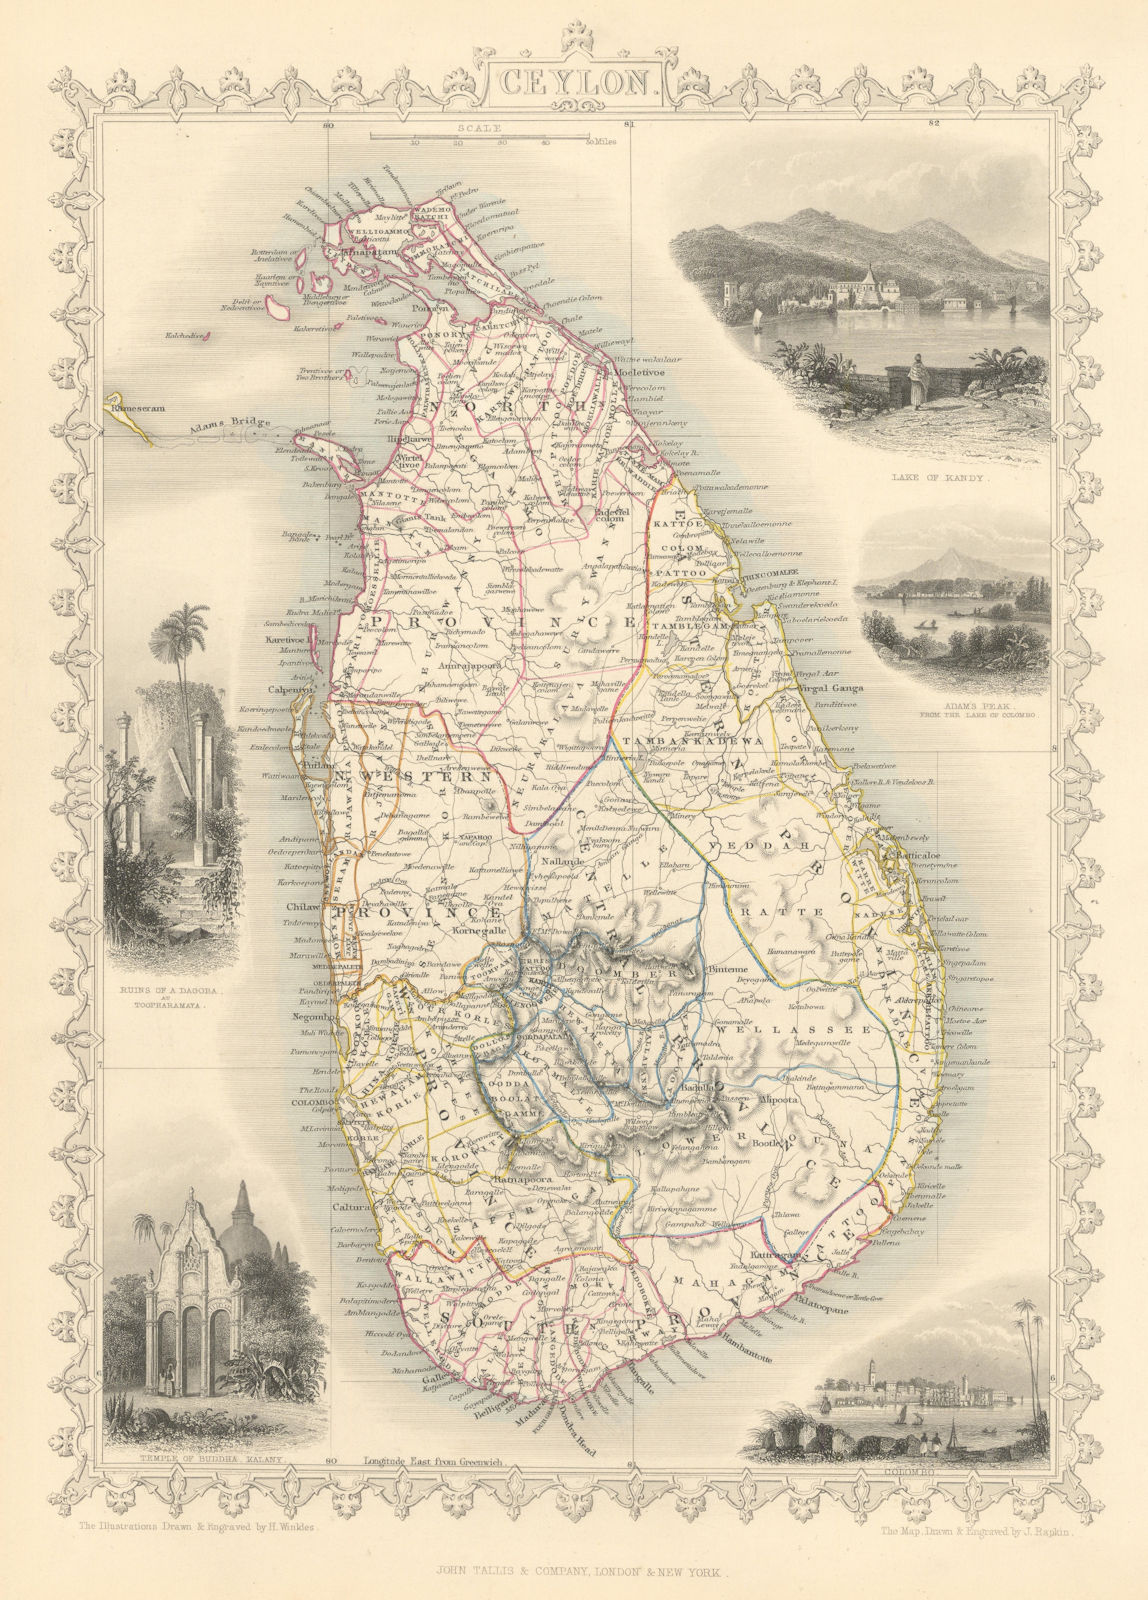 CEYLON. in provinces. Kandy & Colombo views. Sri Lanka. TALLIS/RAPKIN 1851 map